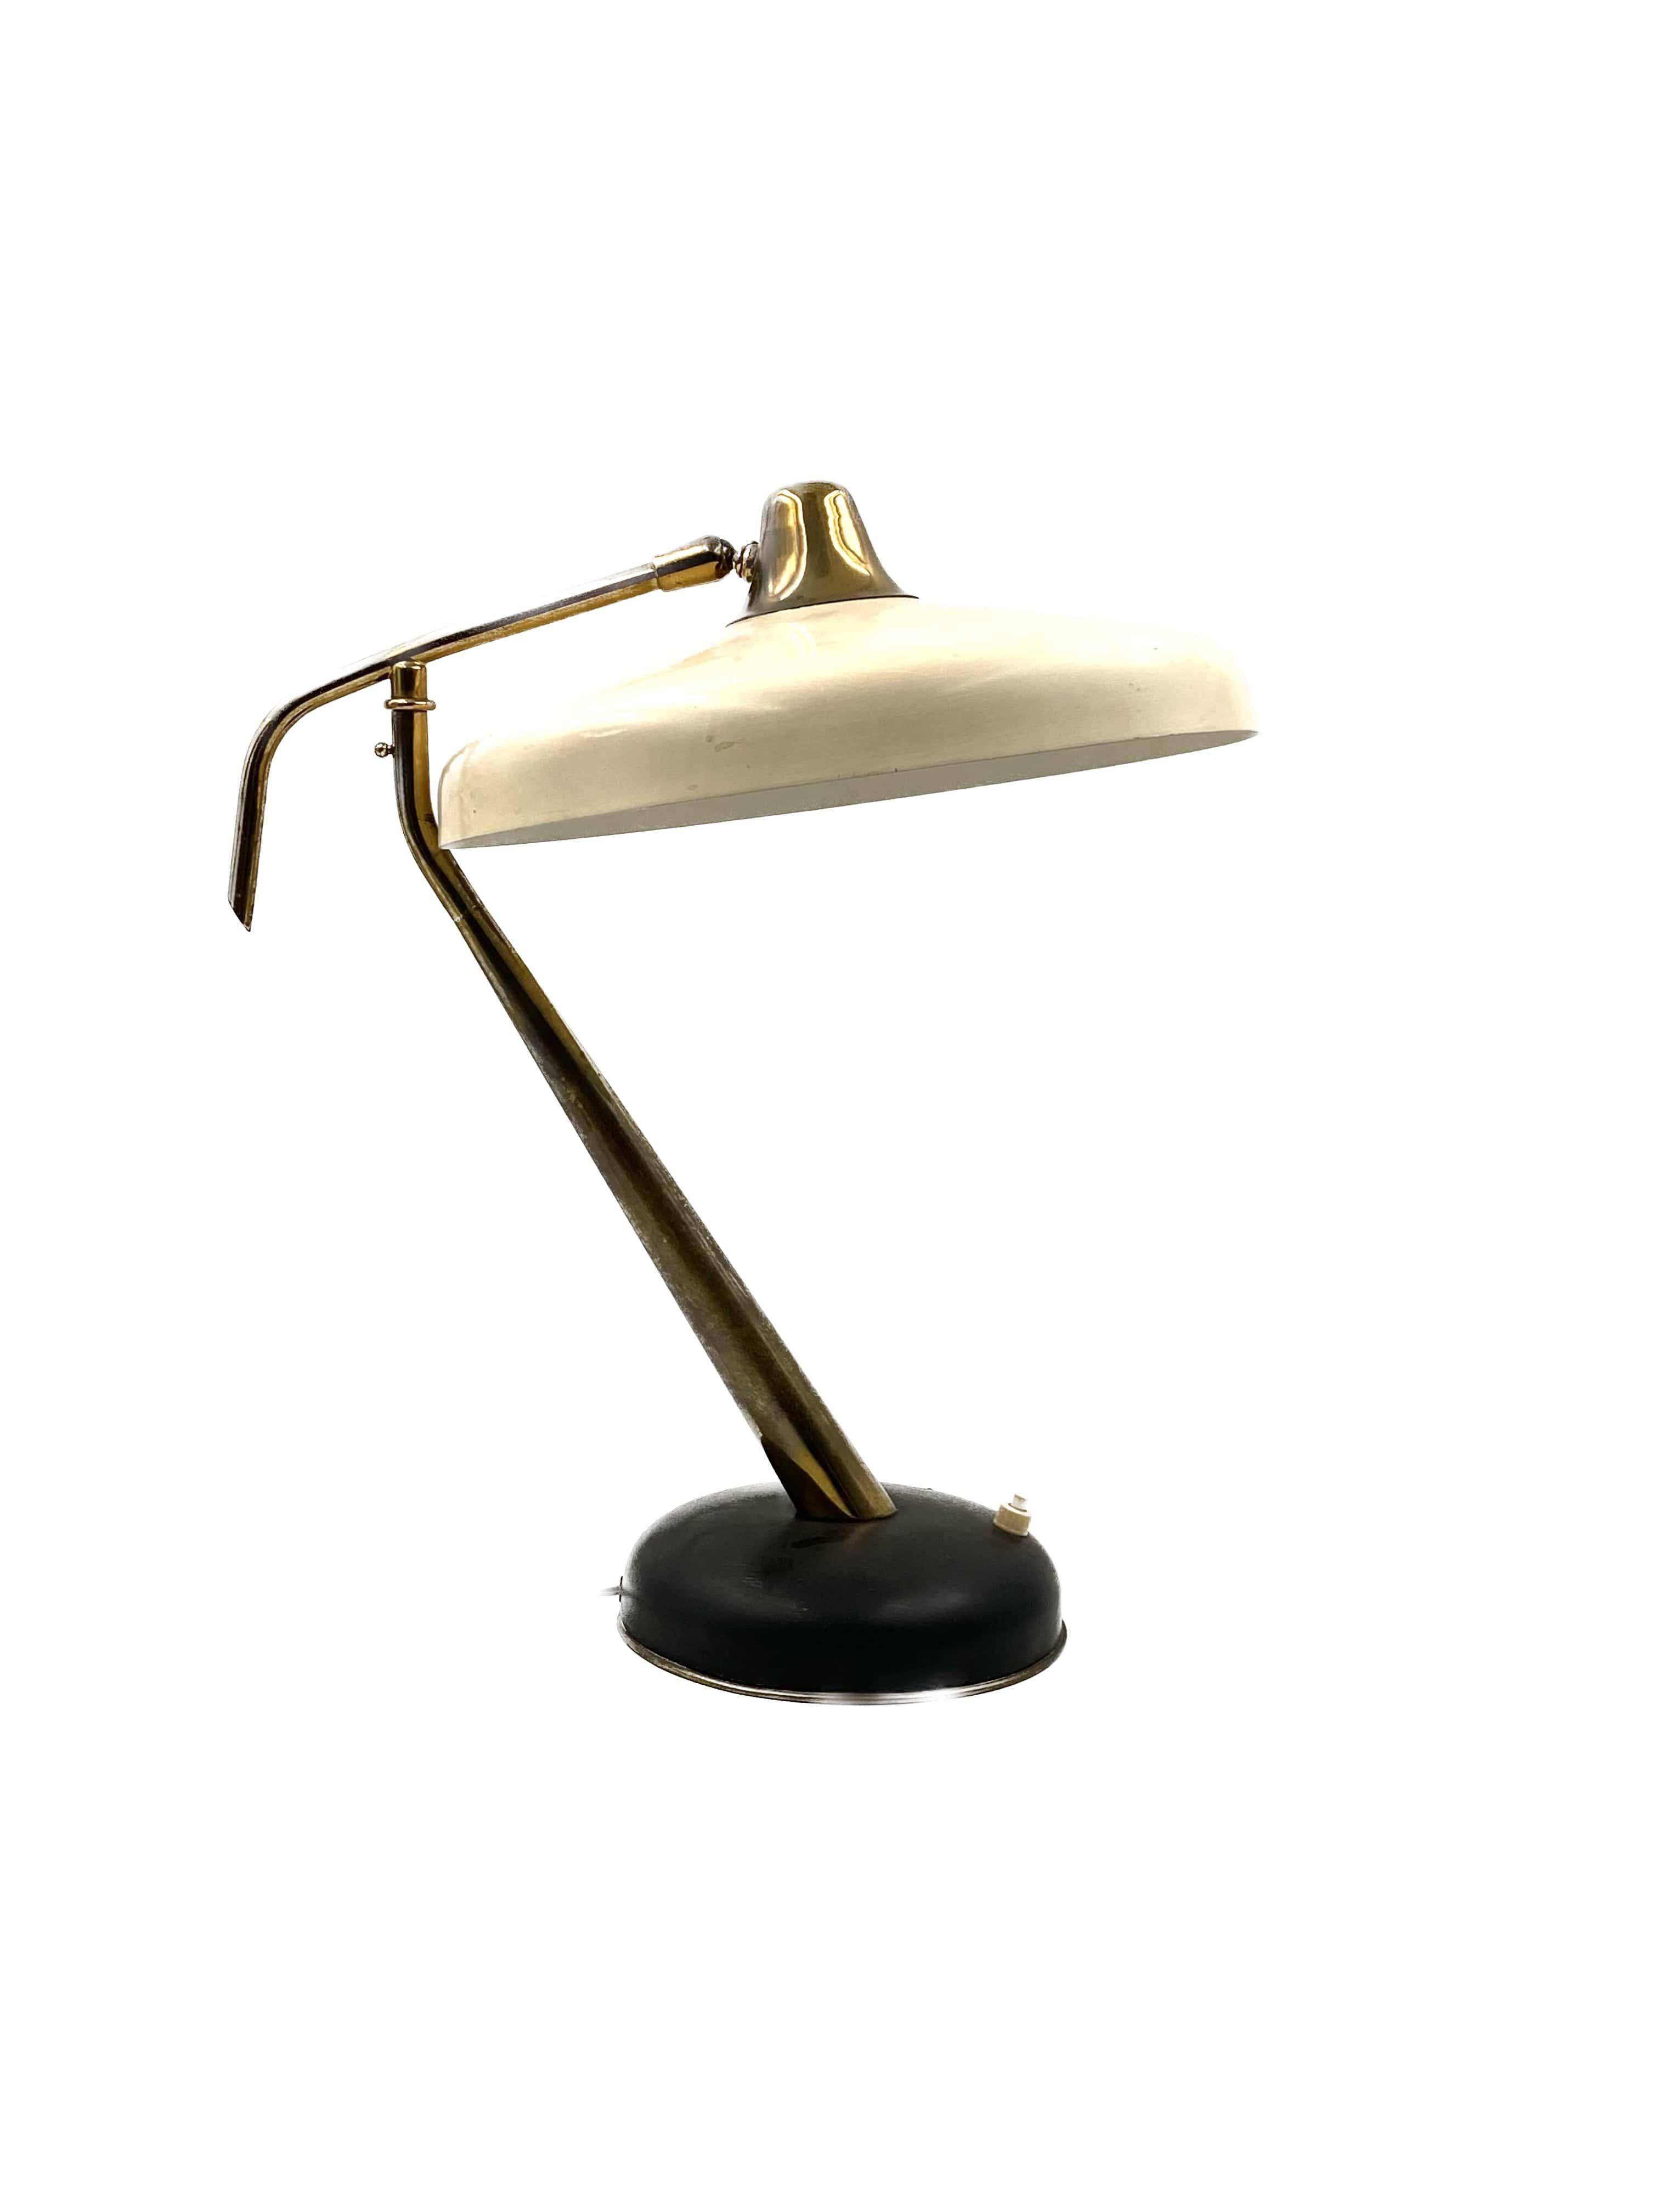 Oscar Torlasco Mod. 331 Brass Desk / Table Lamp, Prod. Lumi, circa 1950 2